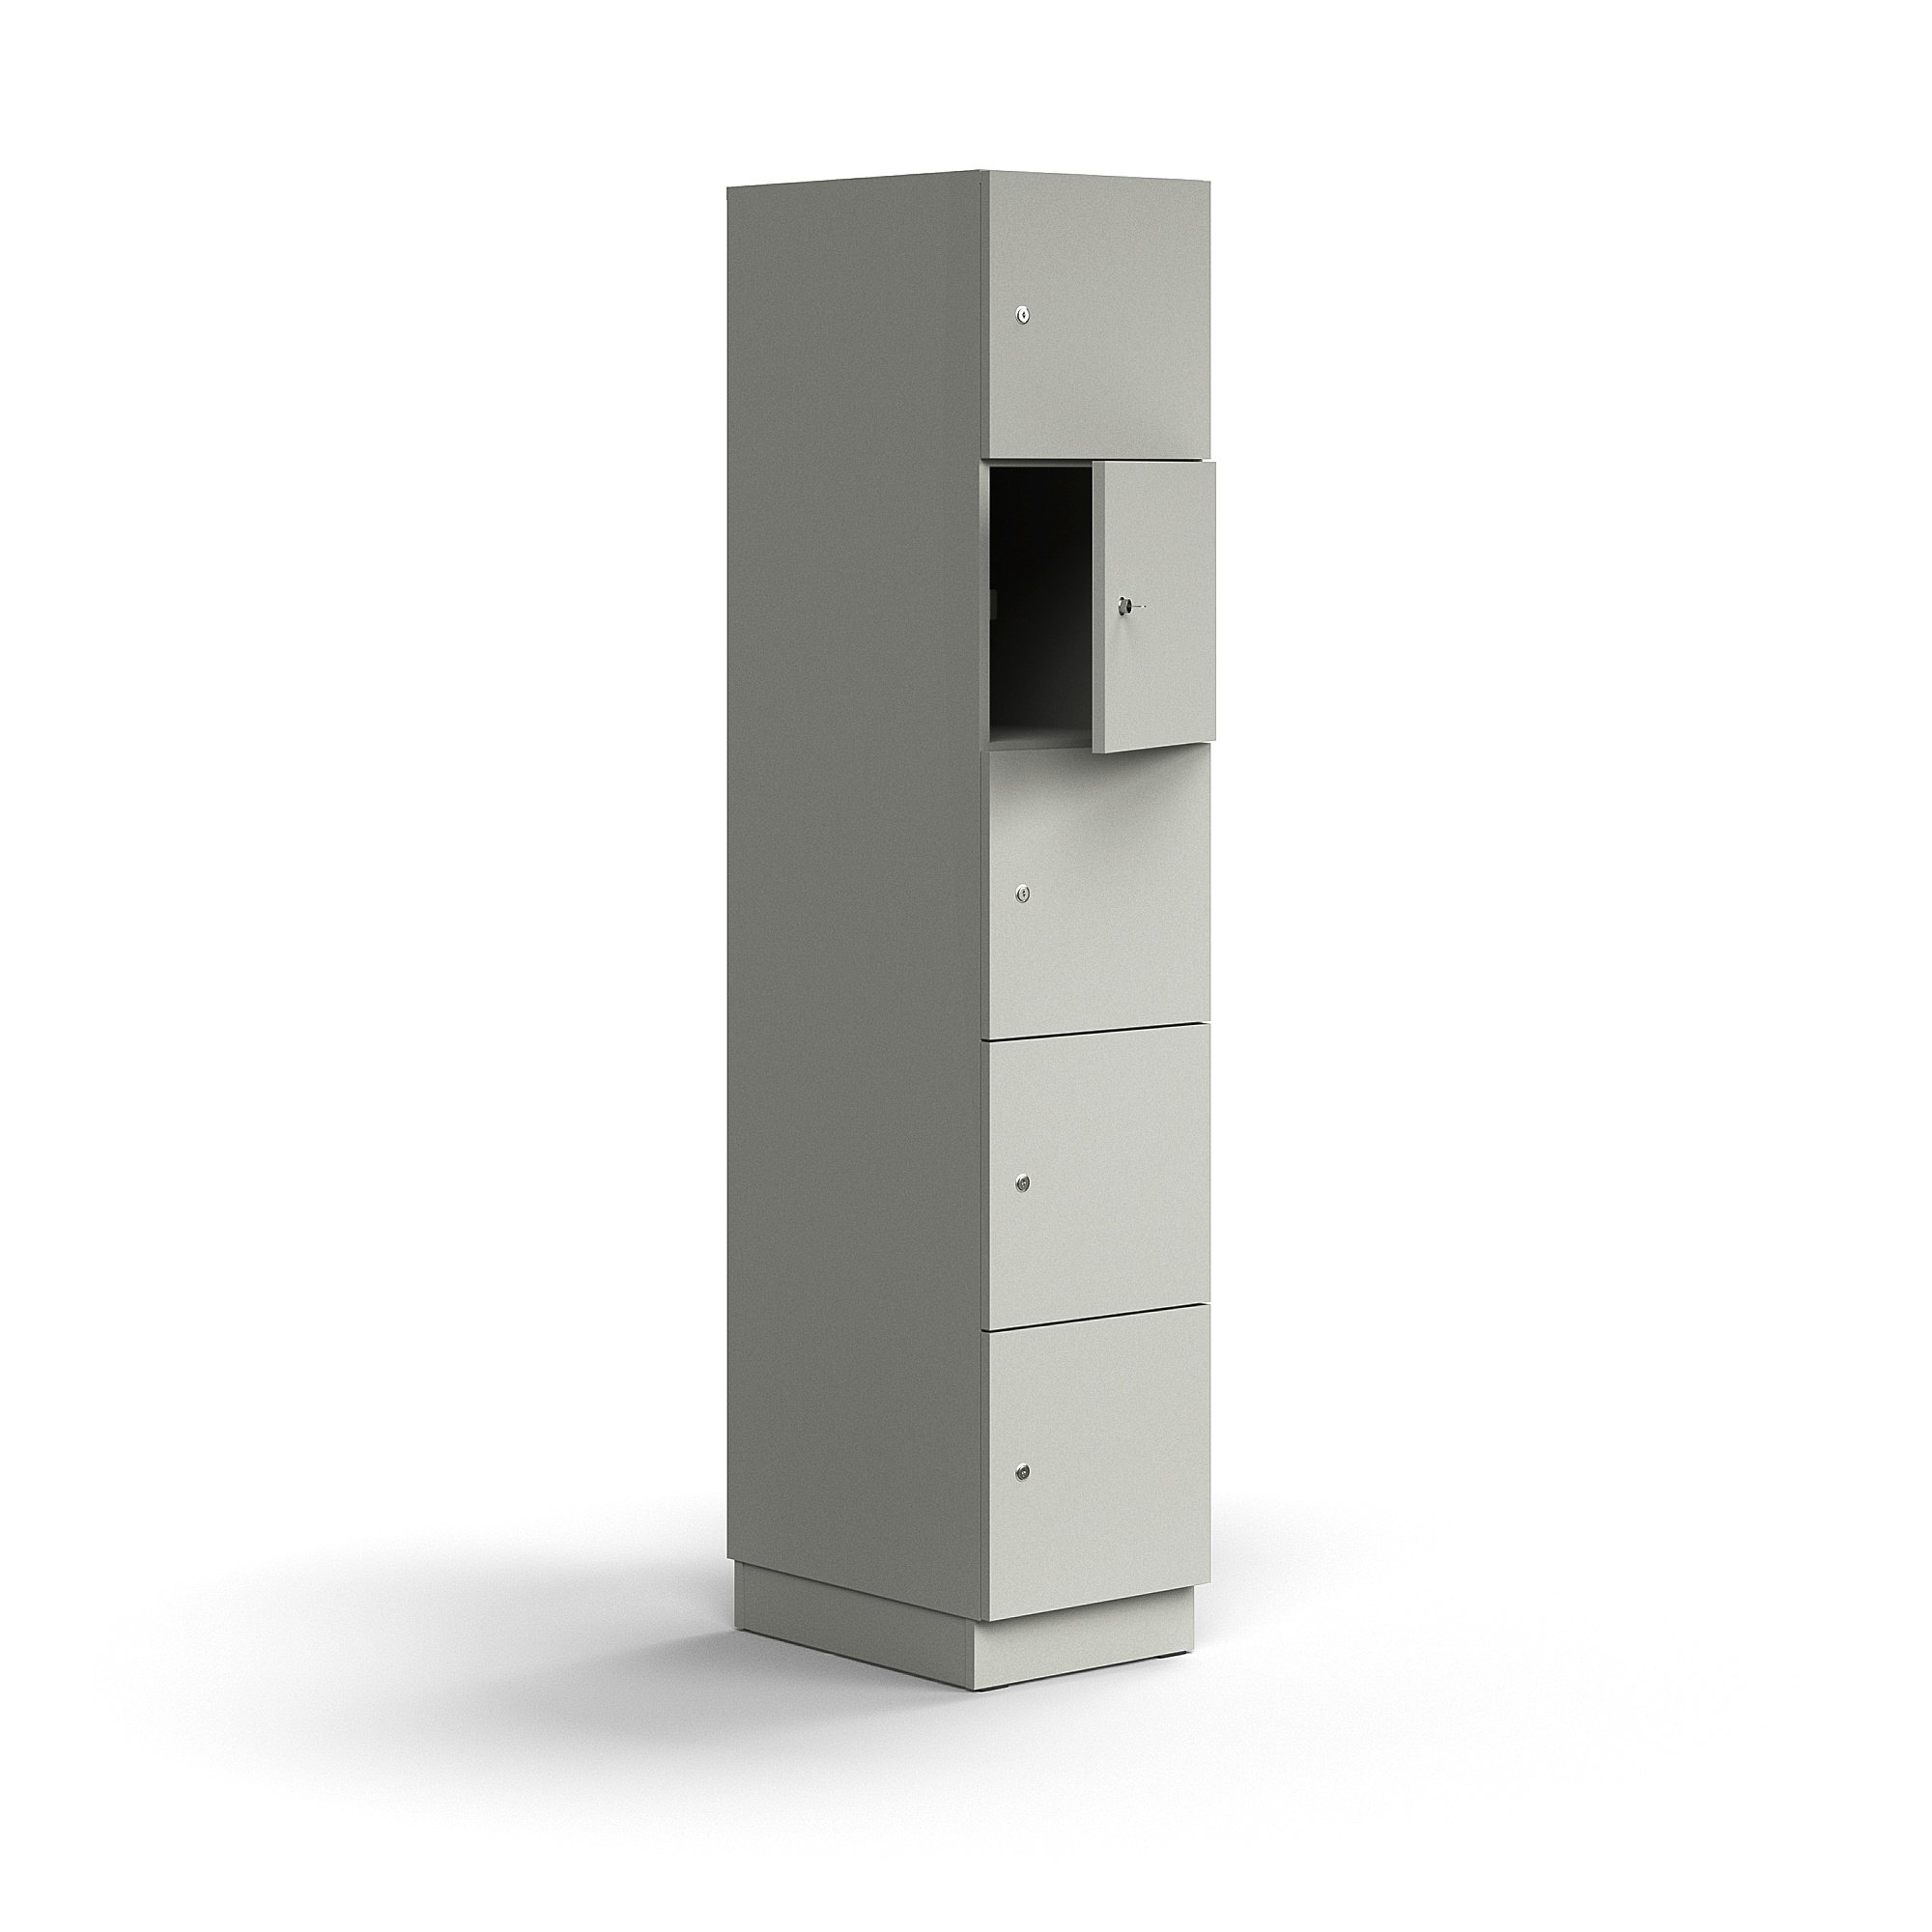 Skříň QBUS, 5 uzamykatelných boxů, sokl, 2020x400x570 mm, světle šedá